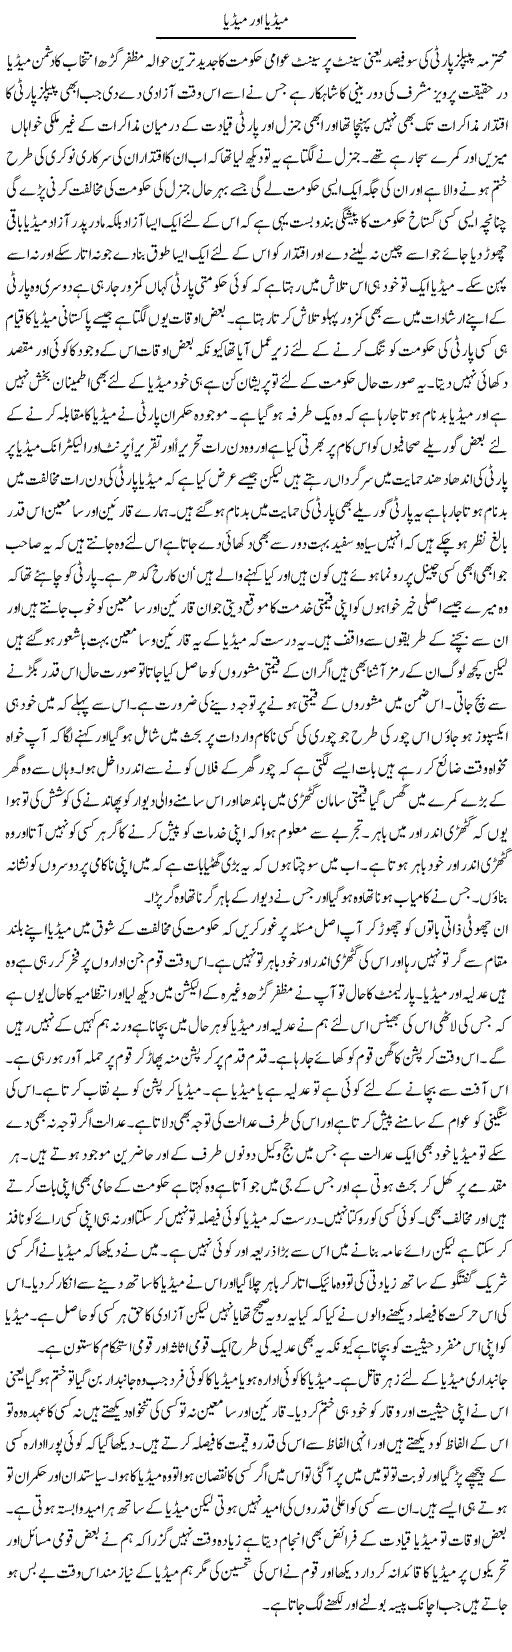 Media Express Column Abdul Qadir Hasan 18 May 2010